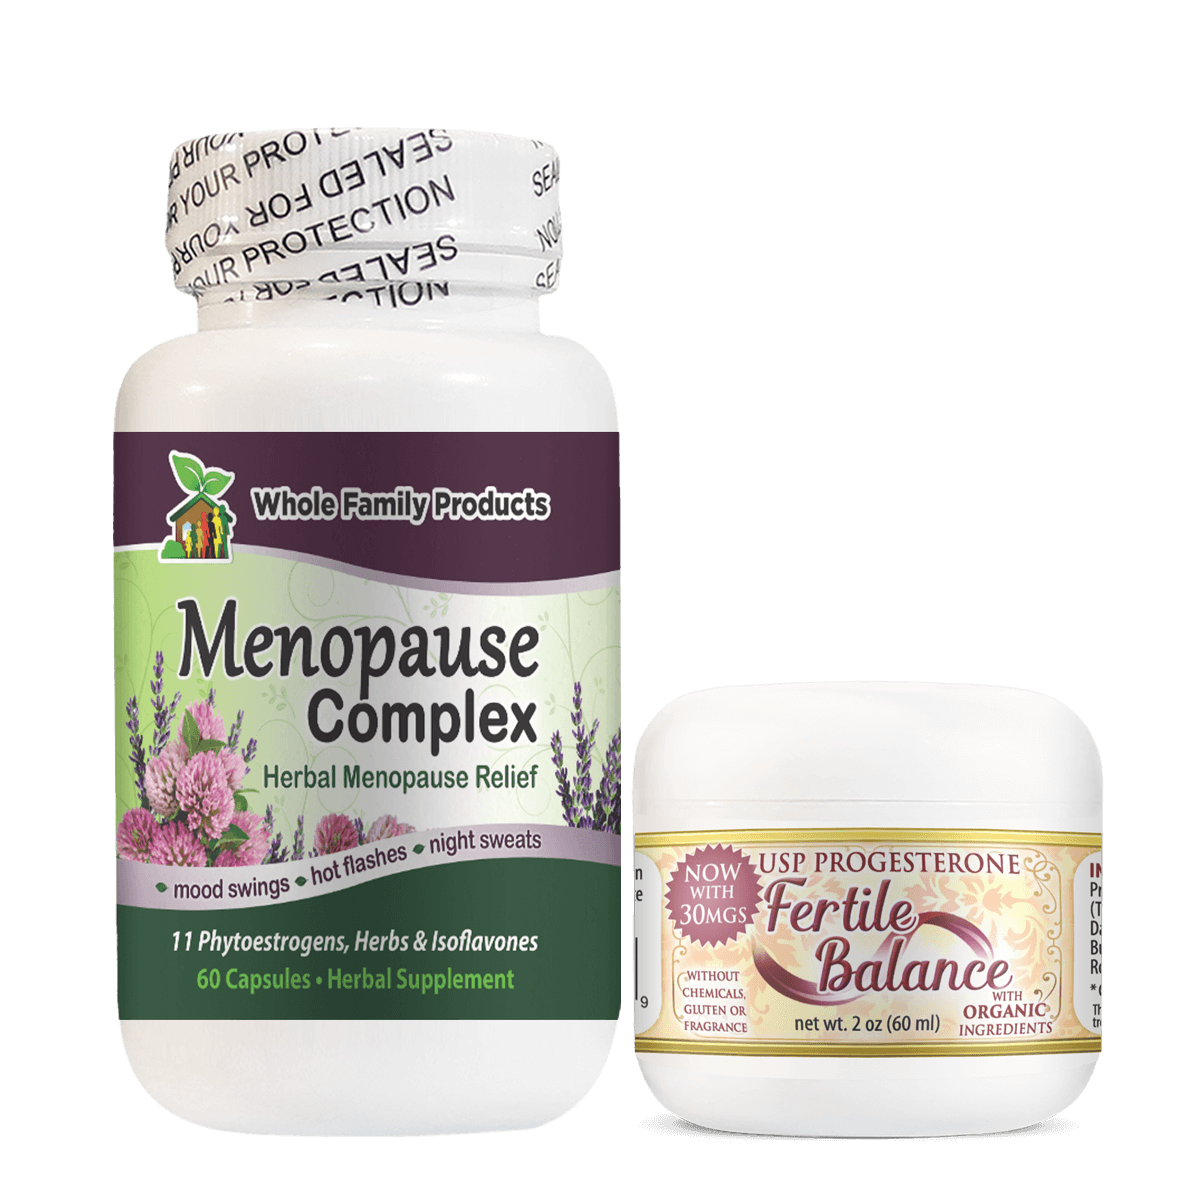 Menopause Complex and Fertile Balance Product Bundle